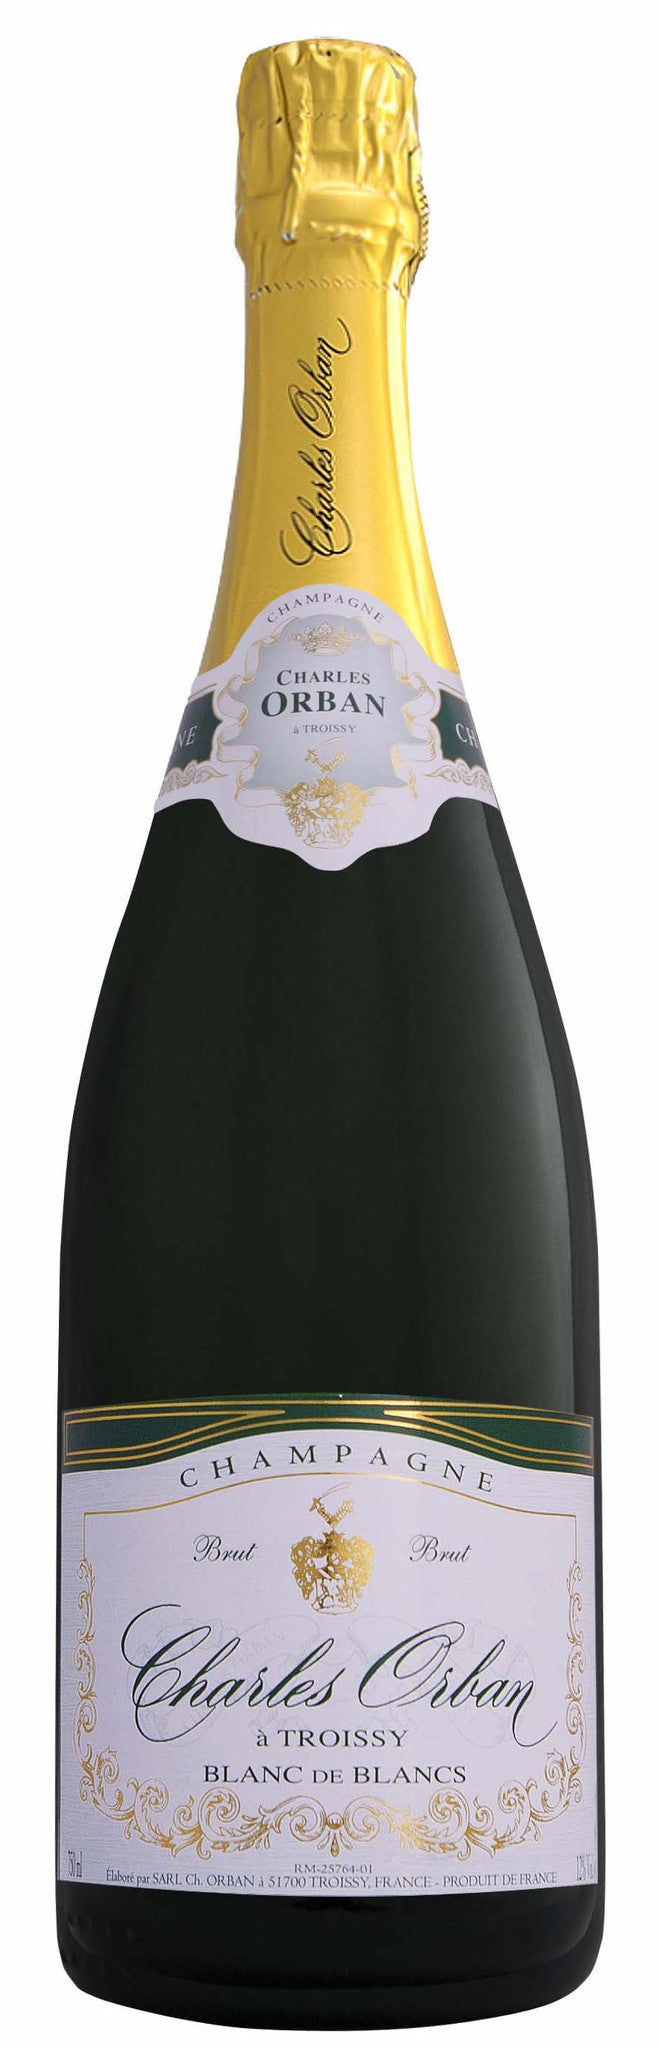 Champagne Charles Orban, Blanc de Blancs Brut